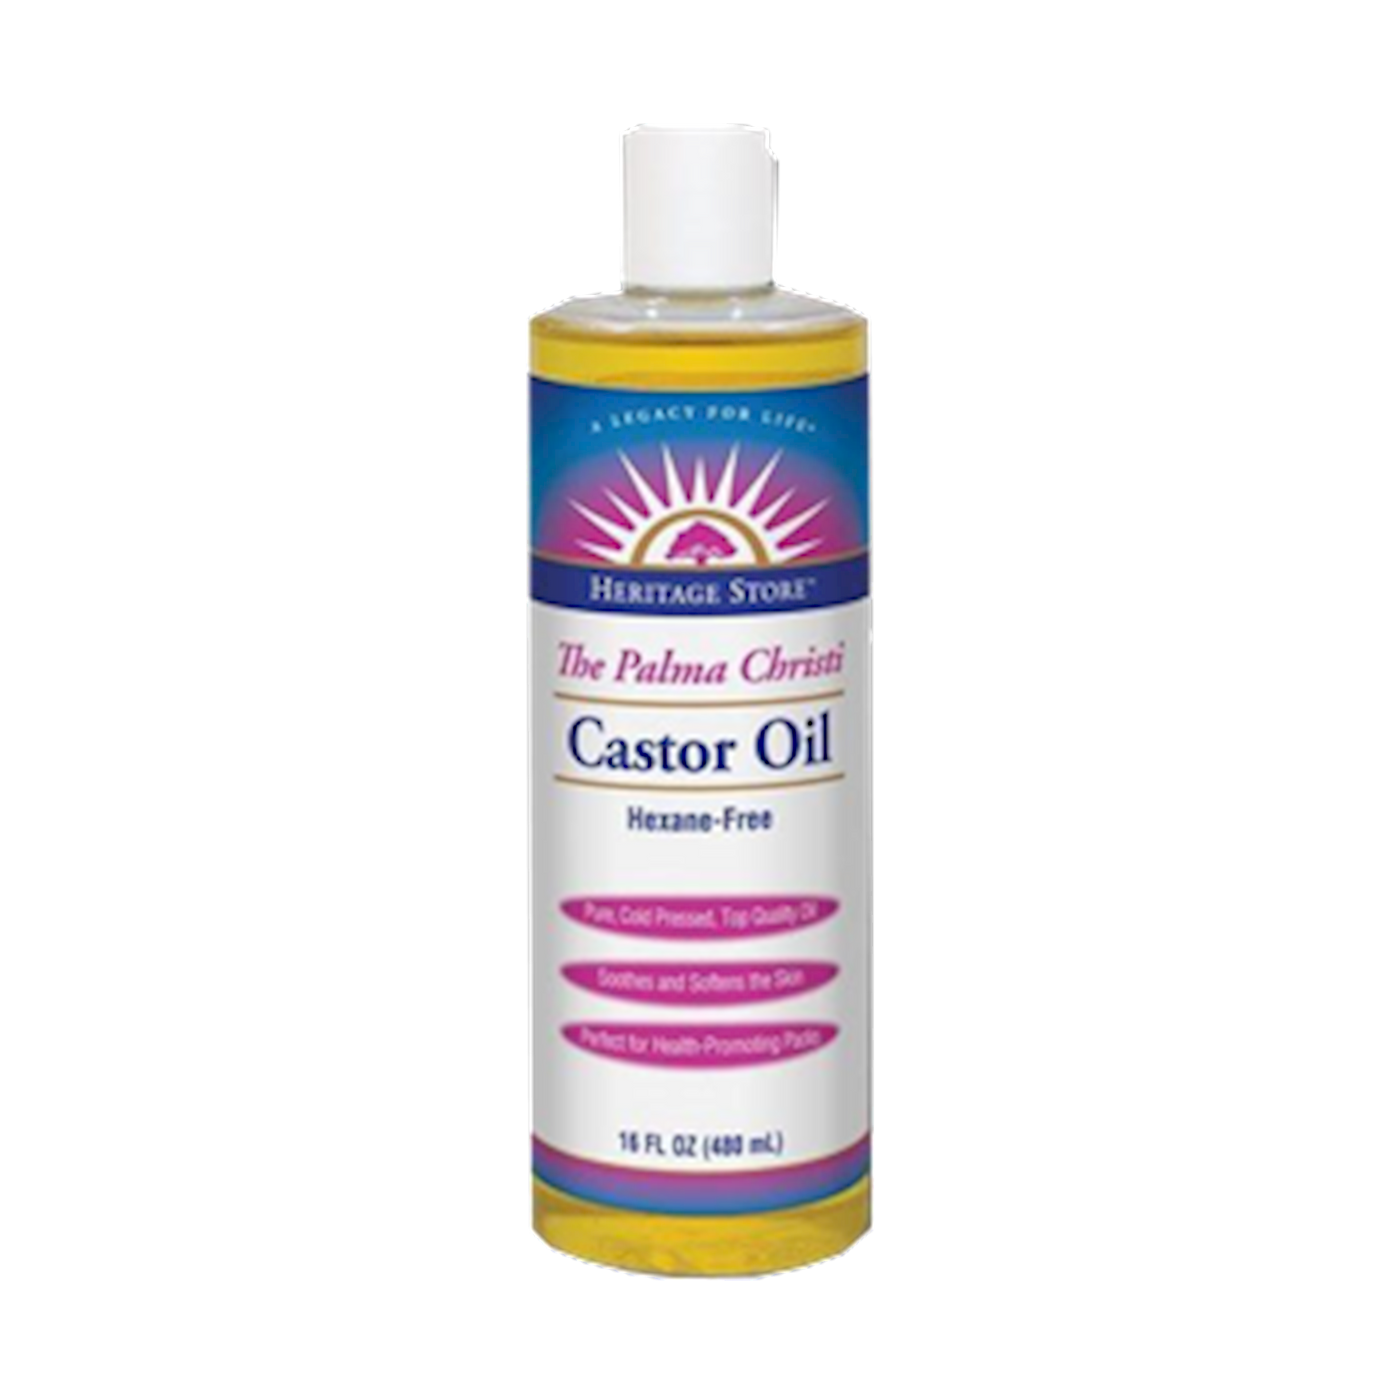 Castor Oil 16 fl oz Curated Wellness